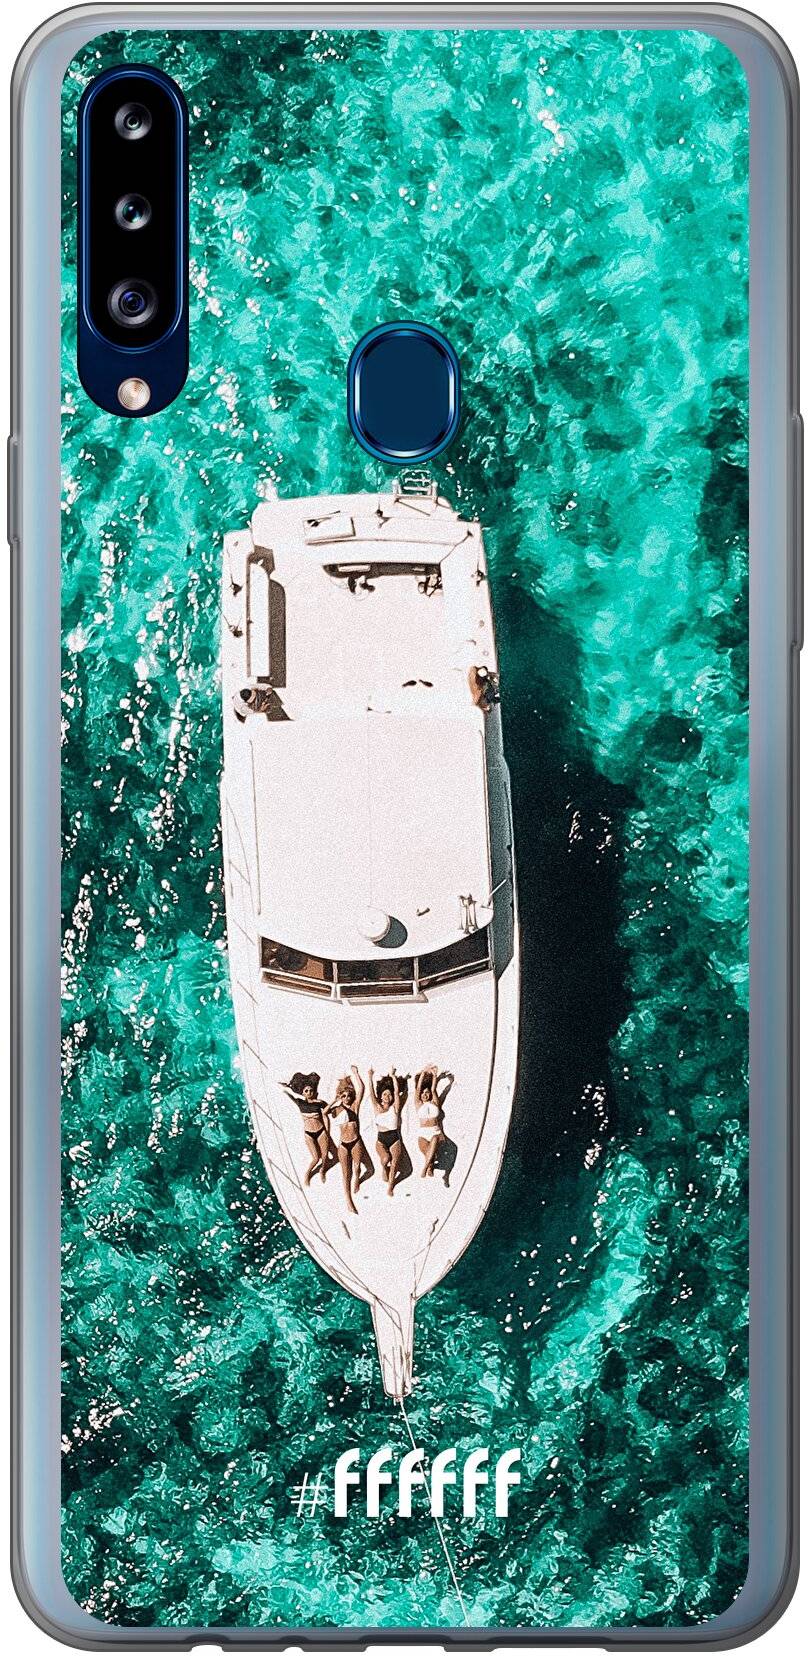 Yacht Life Galaxy A20s